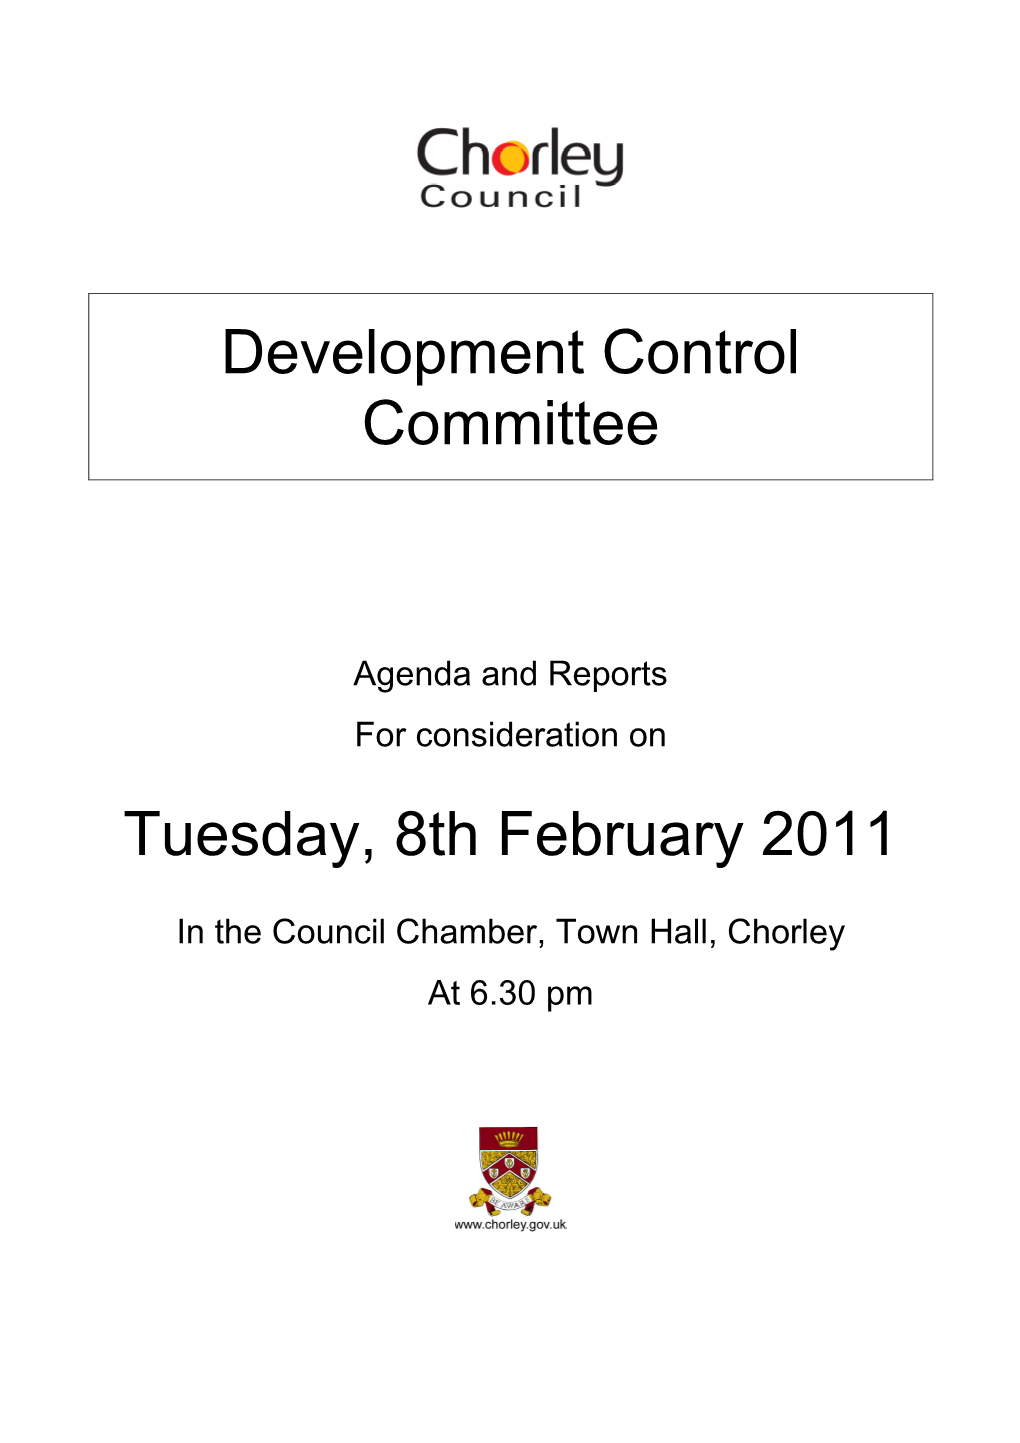 Development Control Committee